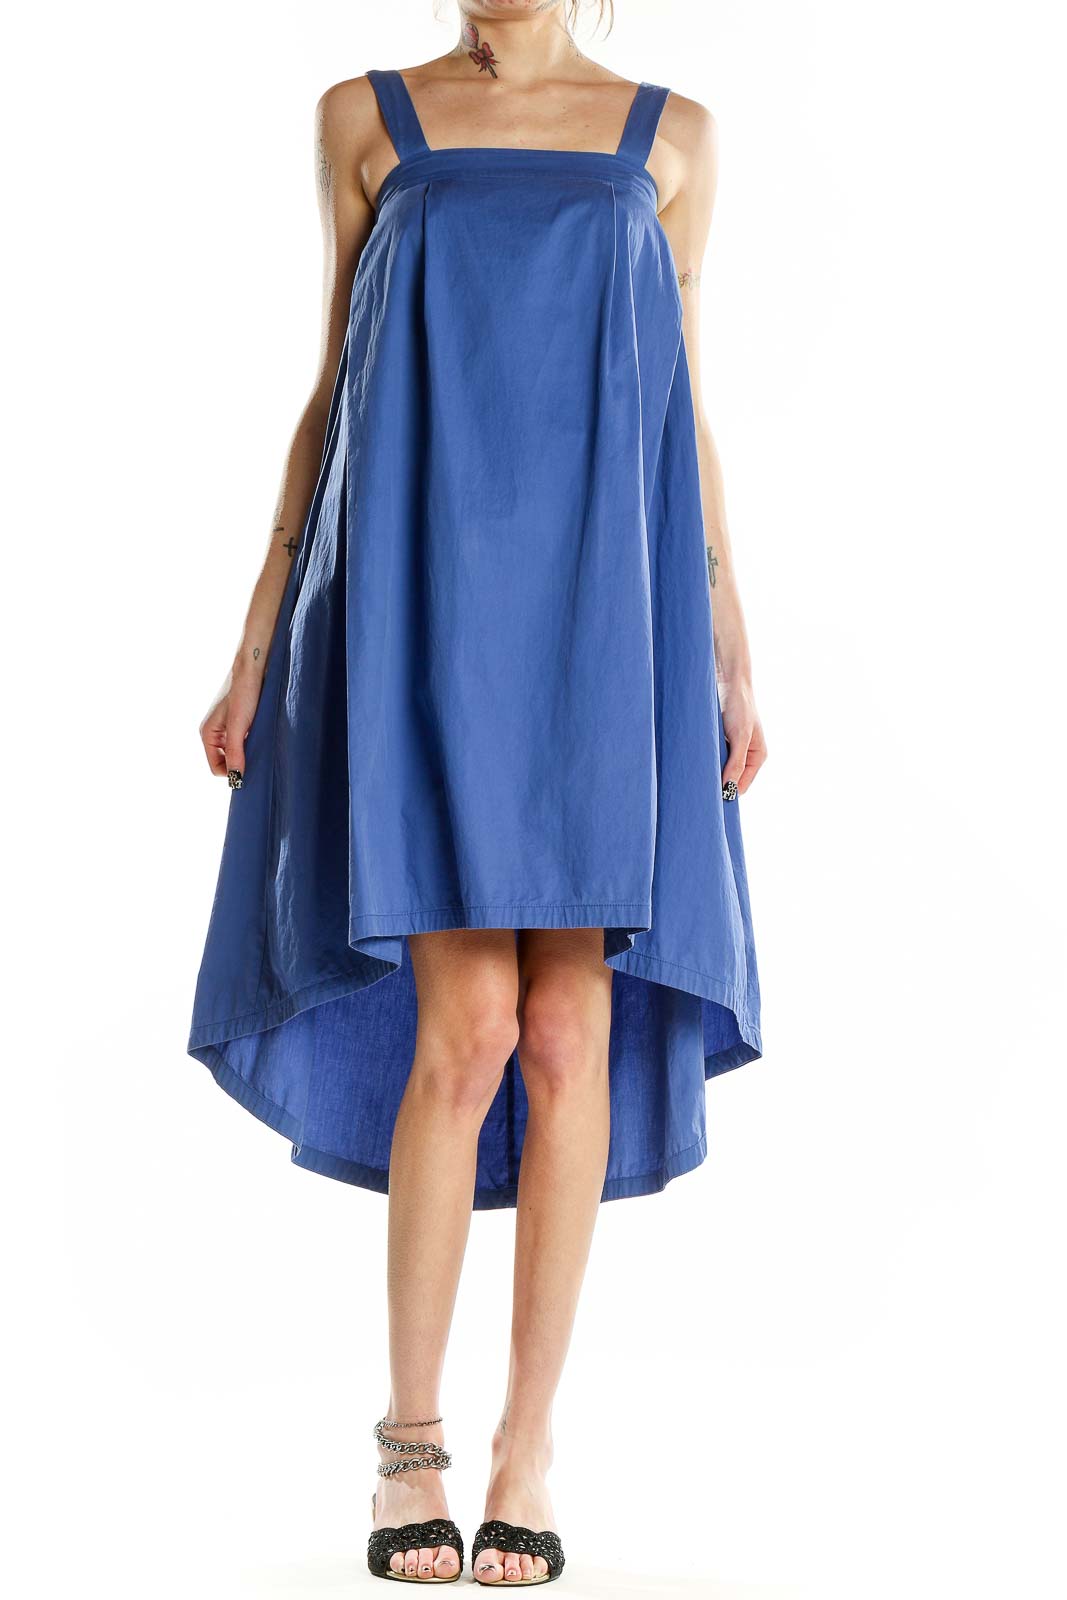 Blue Flare Cotton Dress Front